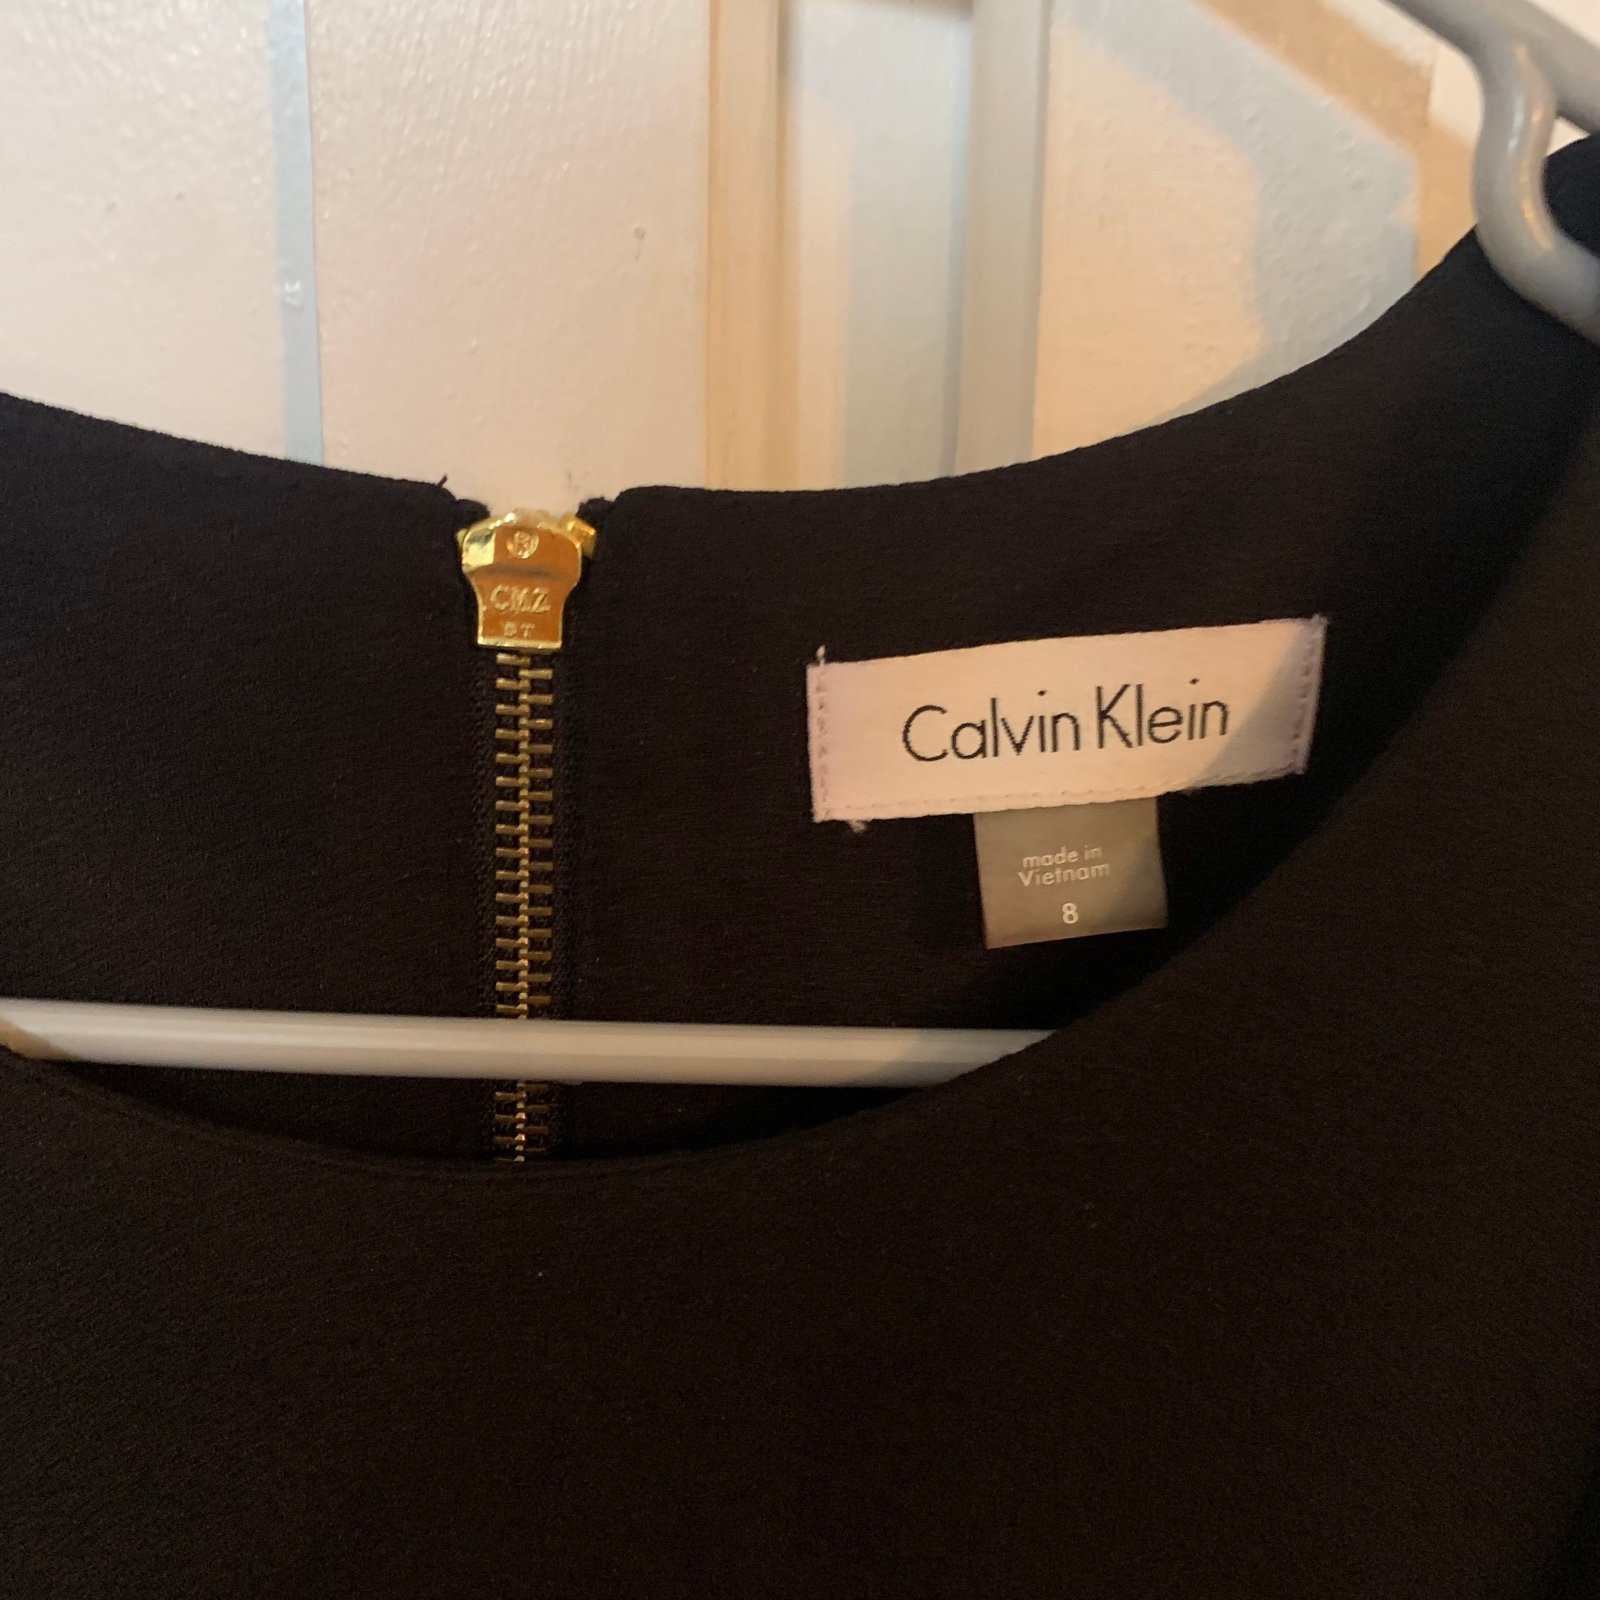 Special offer  Calvin Klein Black Dress iHvMfQurk all for you